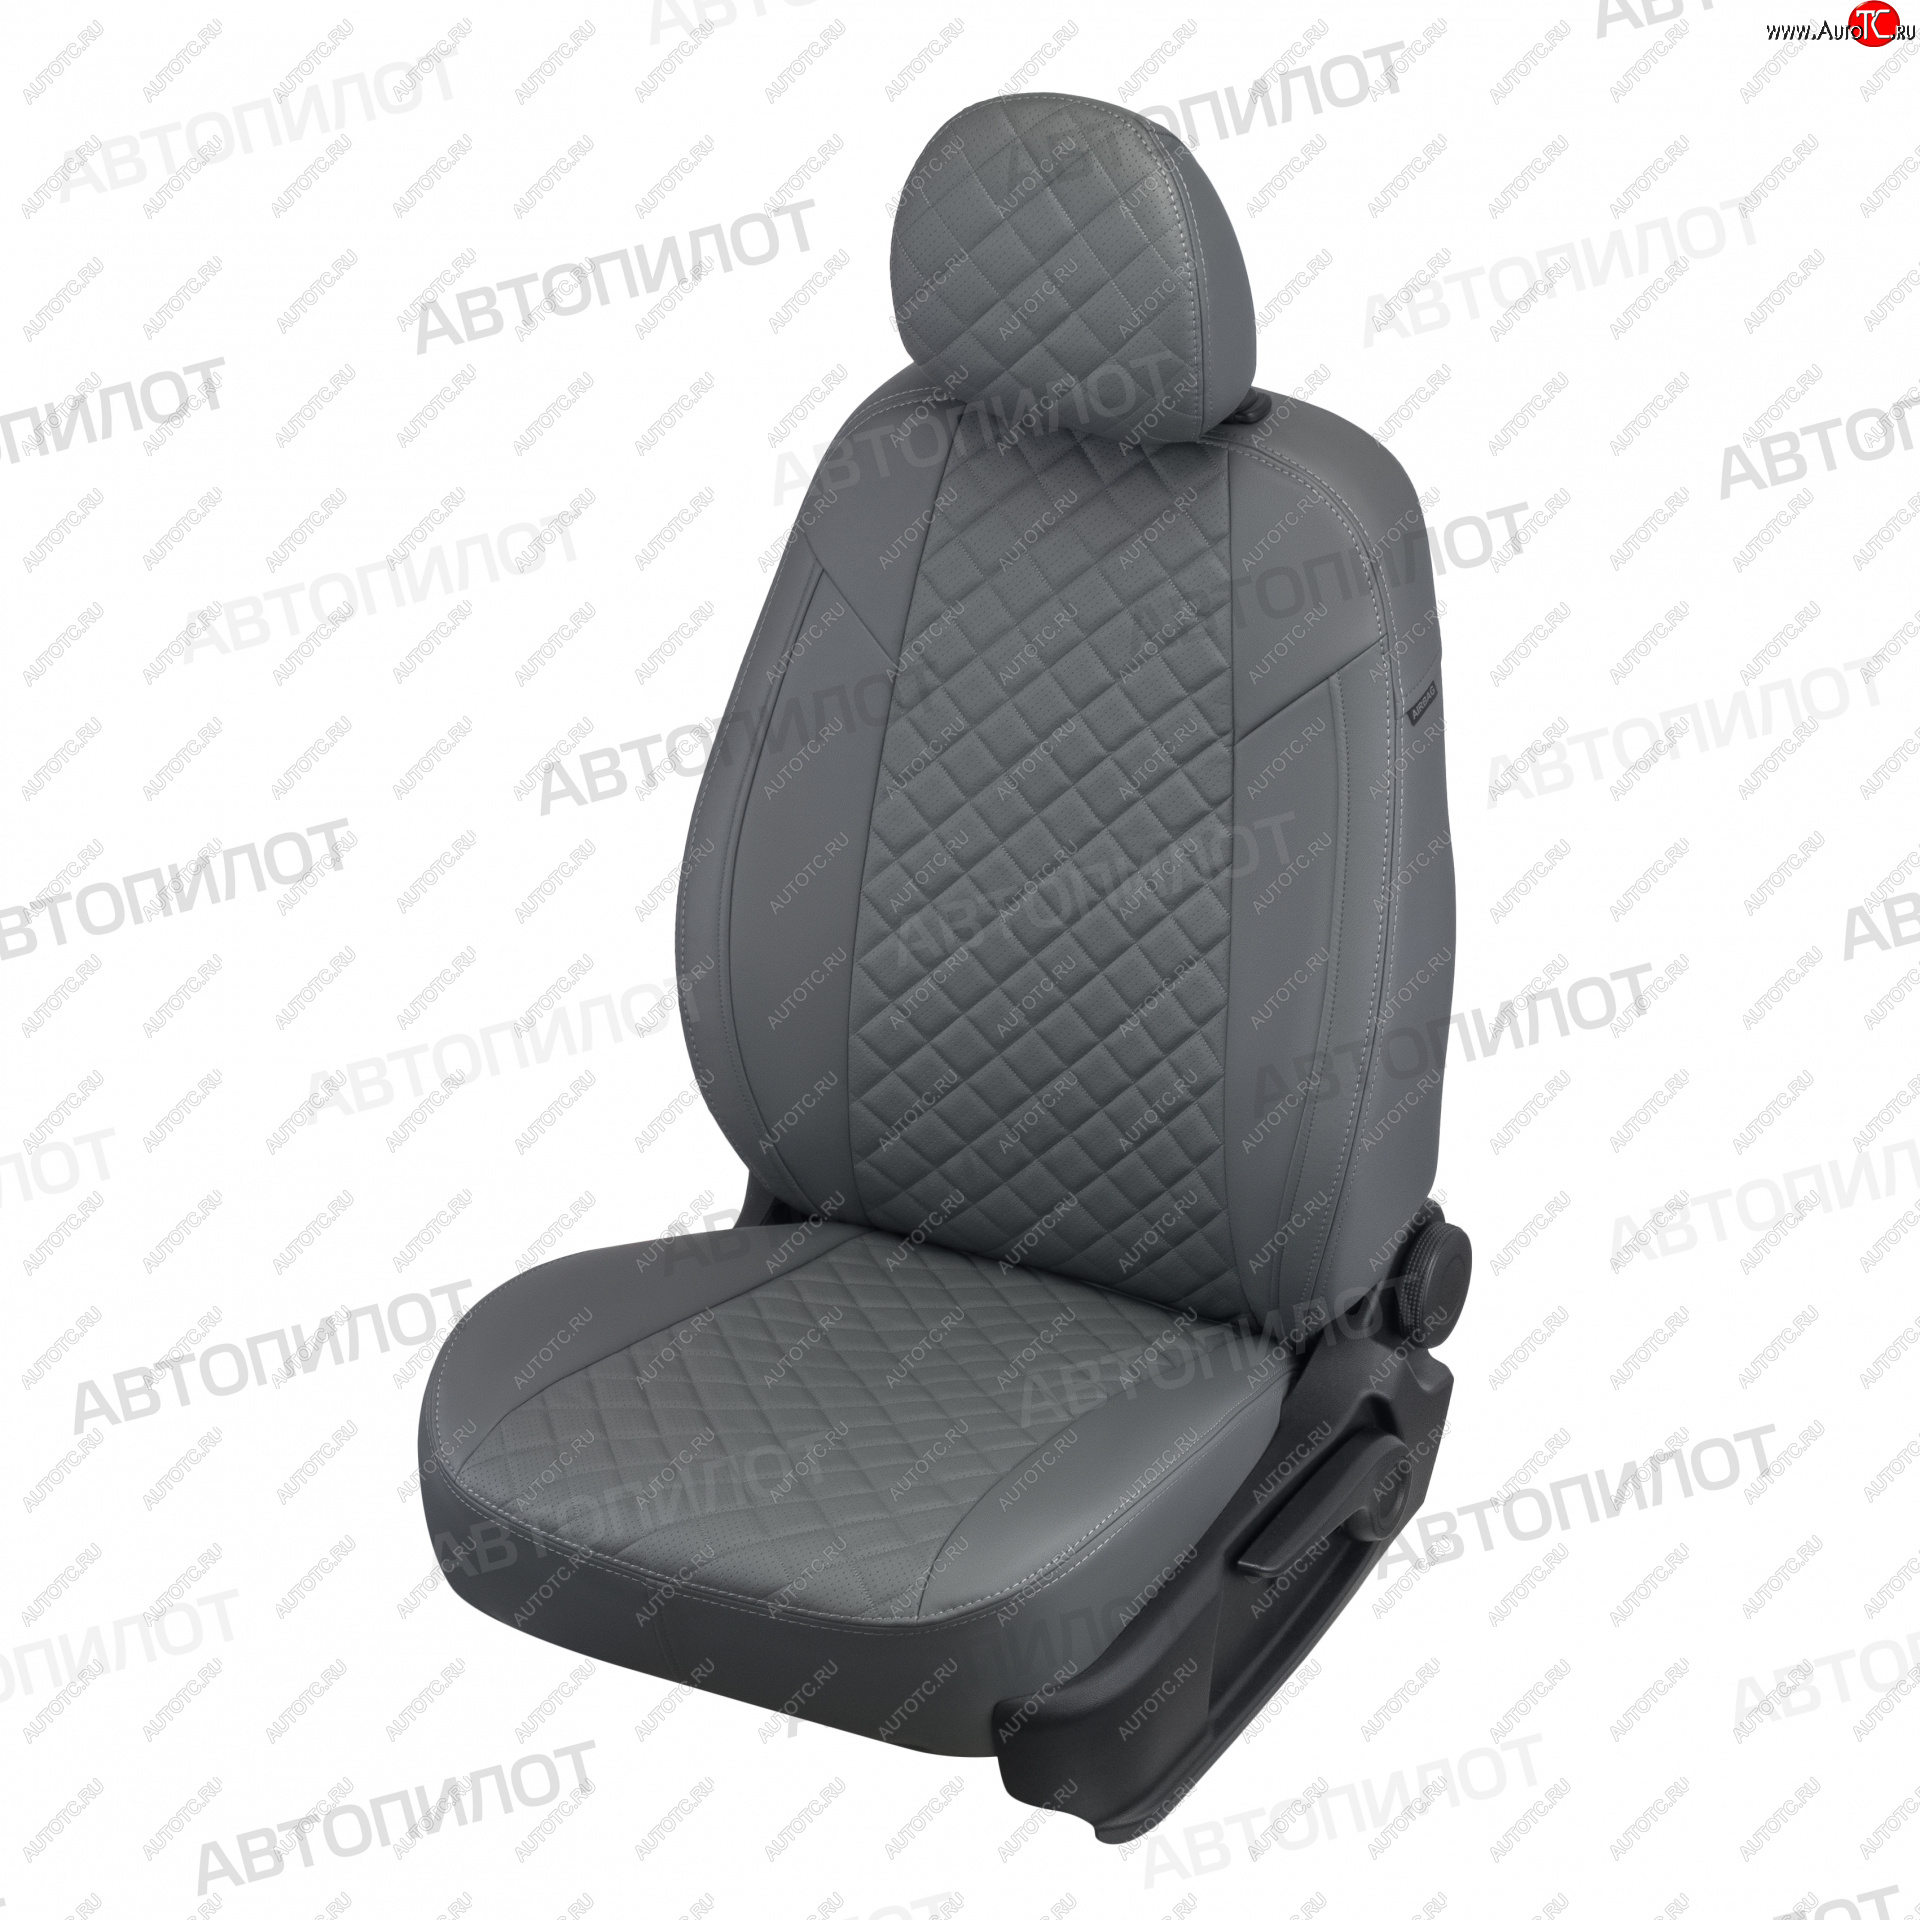 14 499 р. Чехлы сидений (5 мест, экокожа) Автопилот Ромб  Ford Galaxy  WGR (1995-2006) (серый)